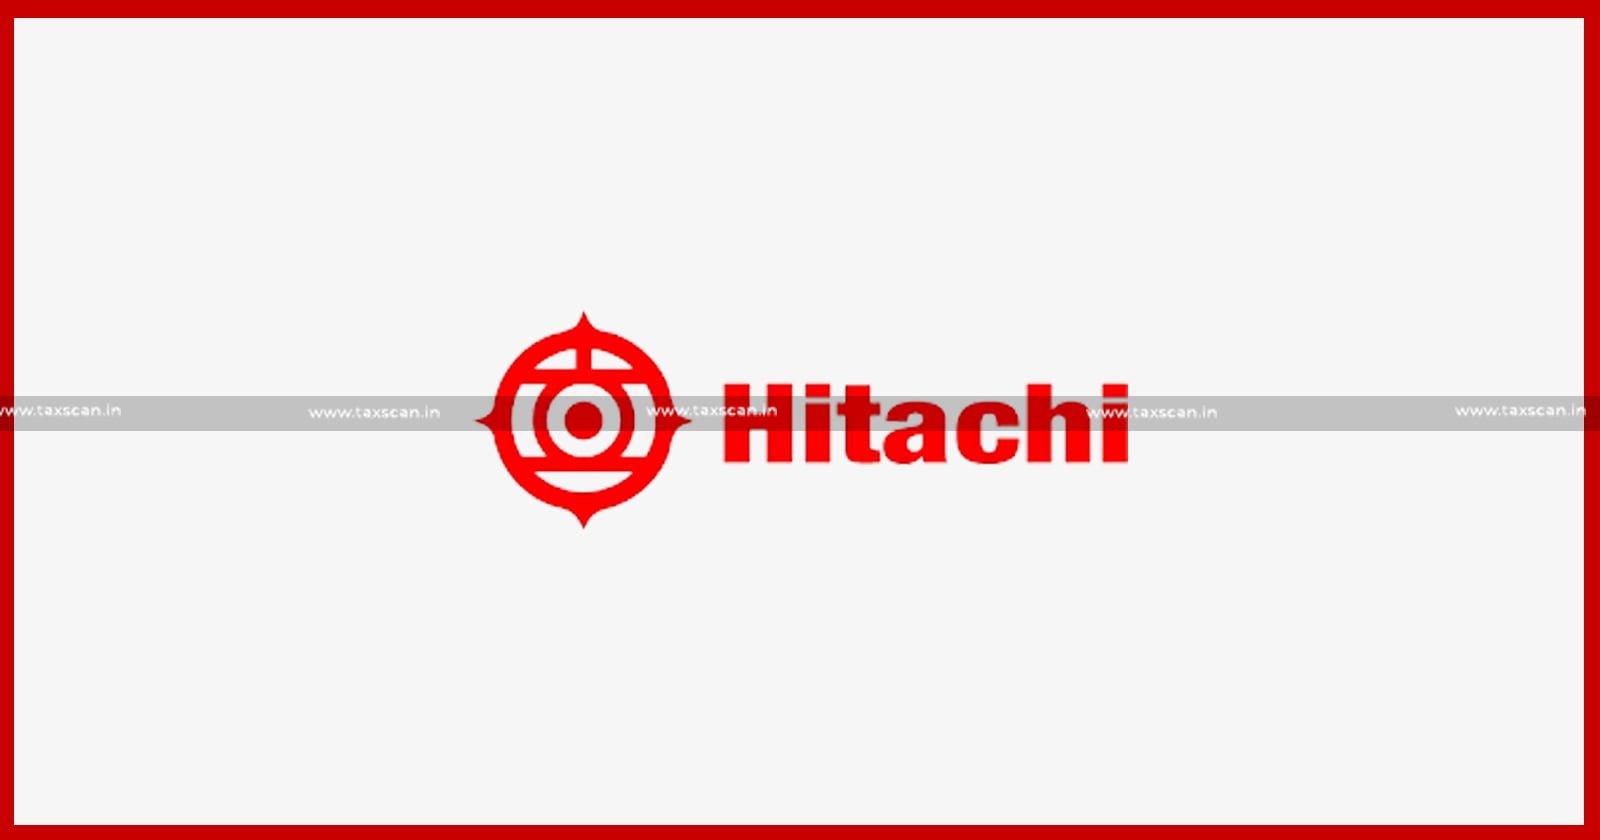 CA- MBA vacancy in Hitachi - TAXSCAN